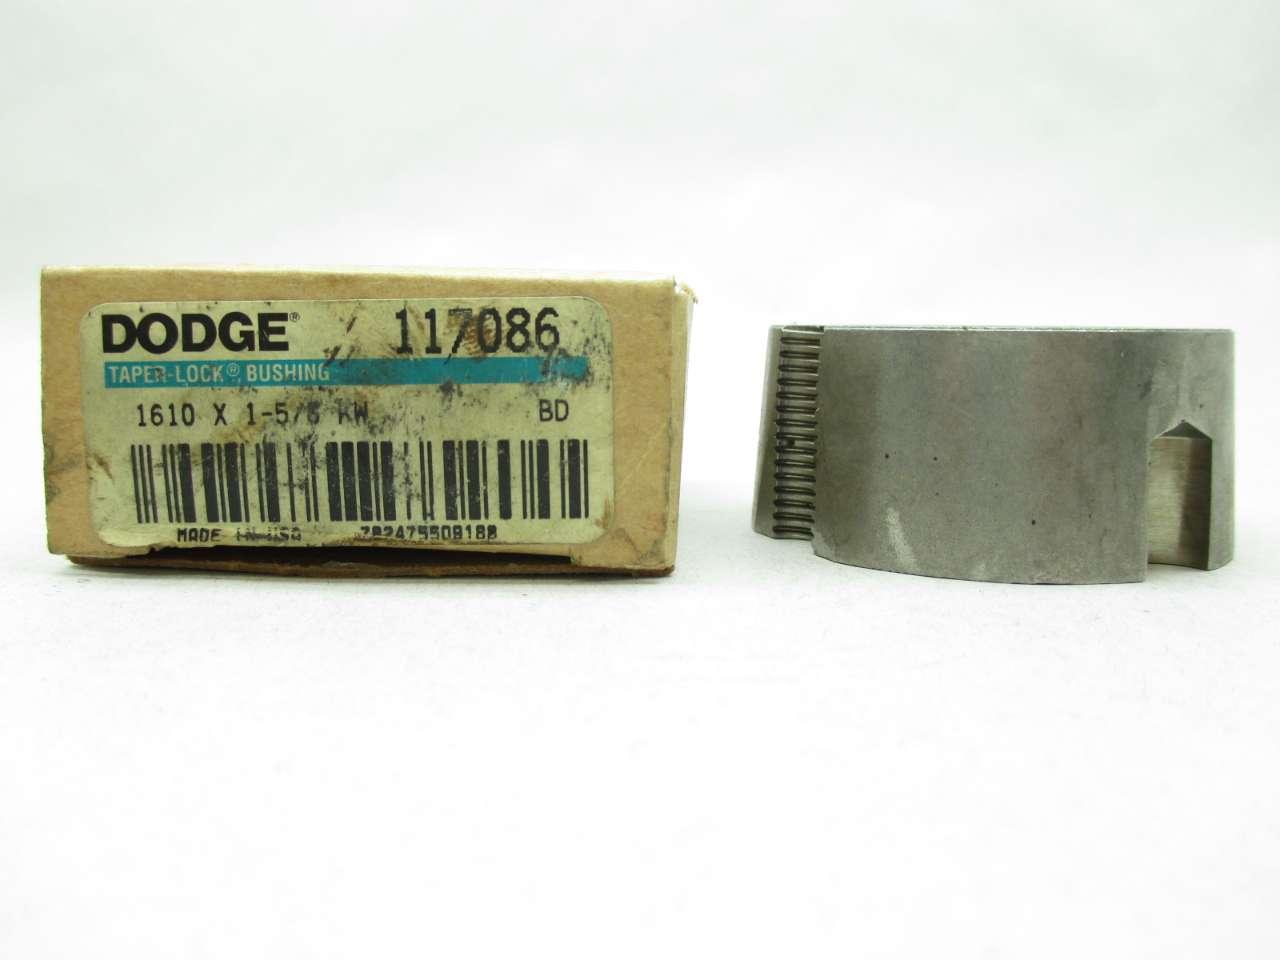 Dodge 117086 Taper Lock Bushing 1610 x 1-5/8" 